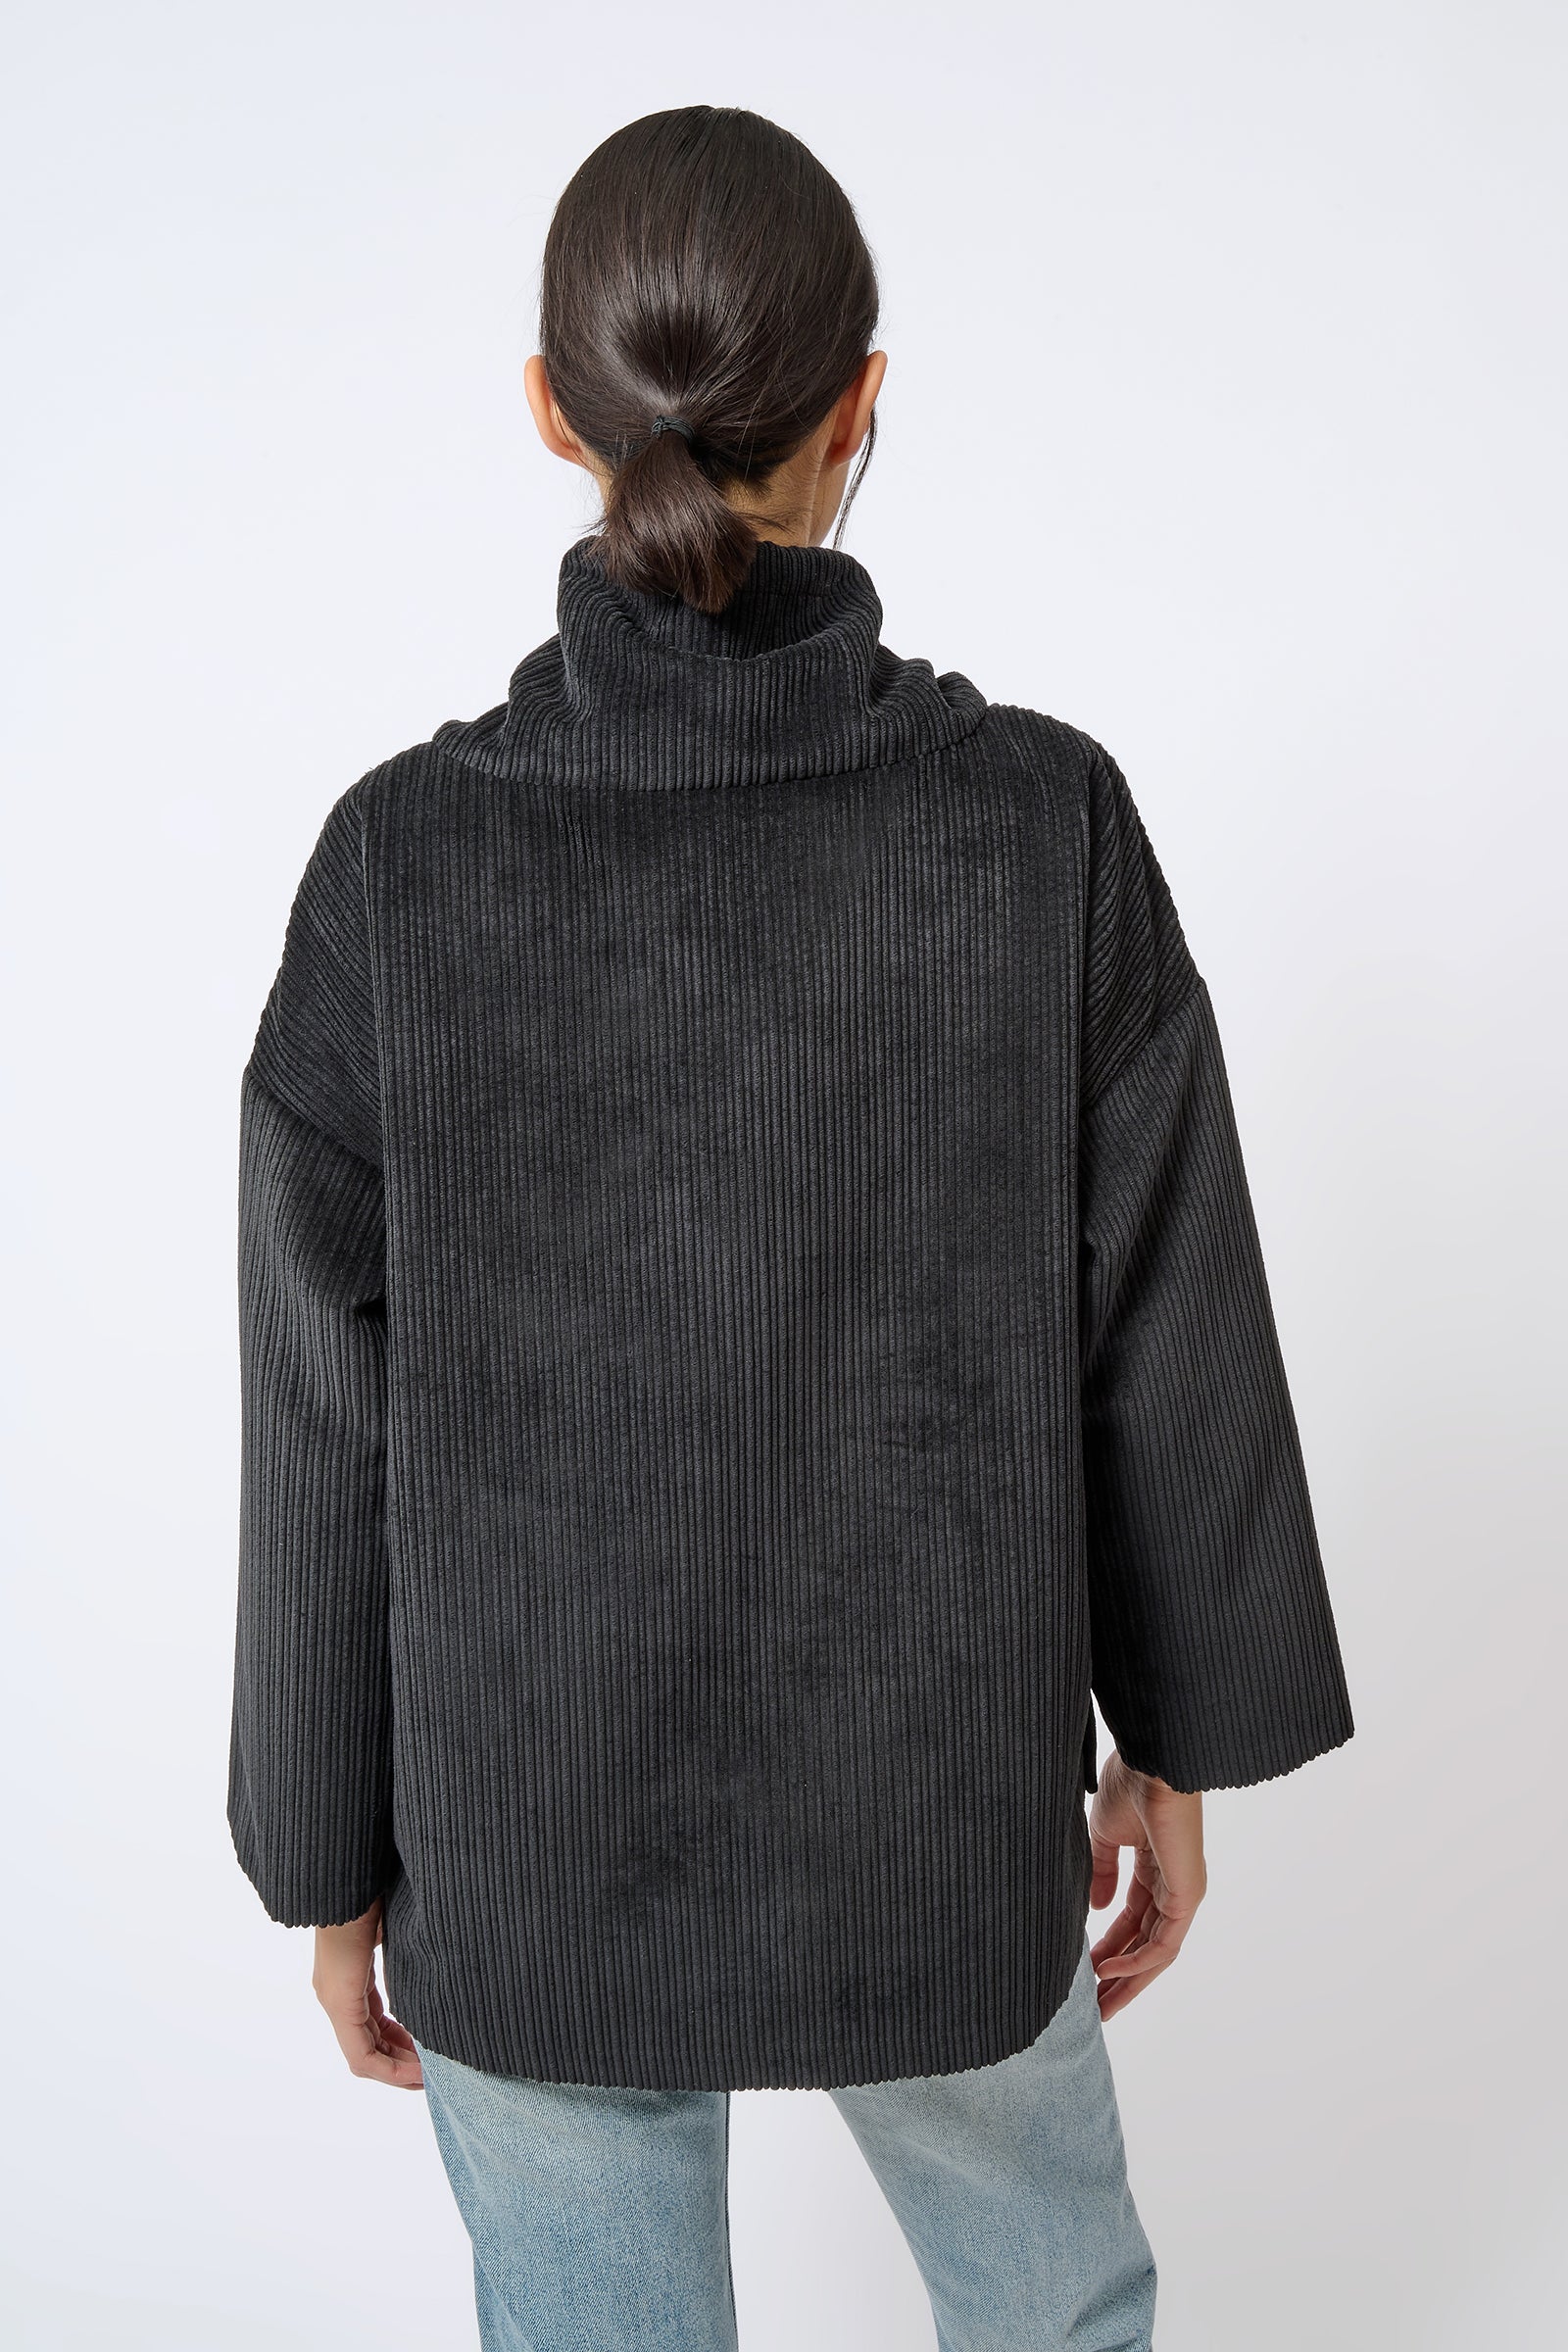 Kal Rieman Debbie Drawstring Pullover in Black on Model Front View